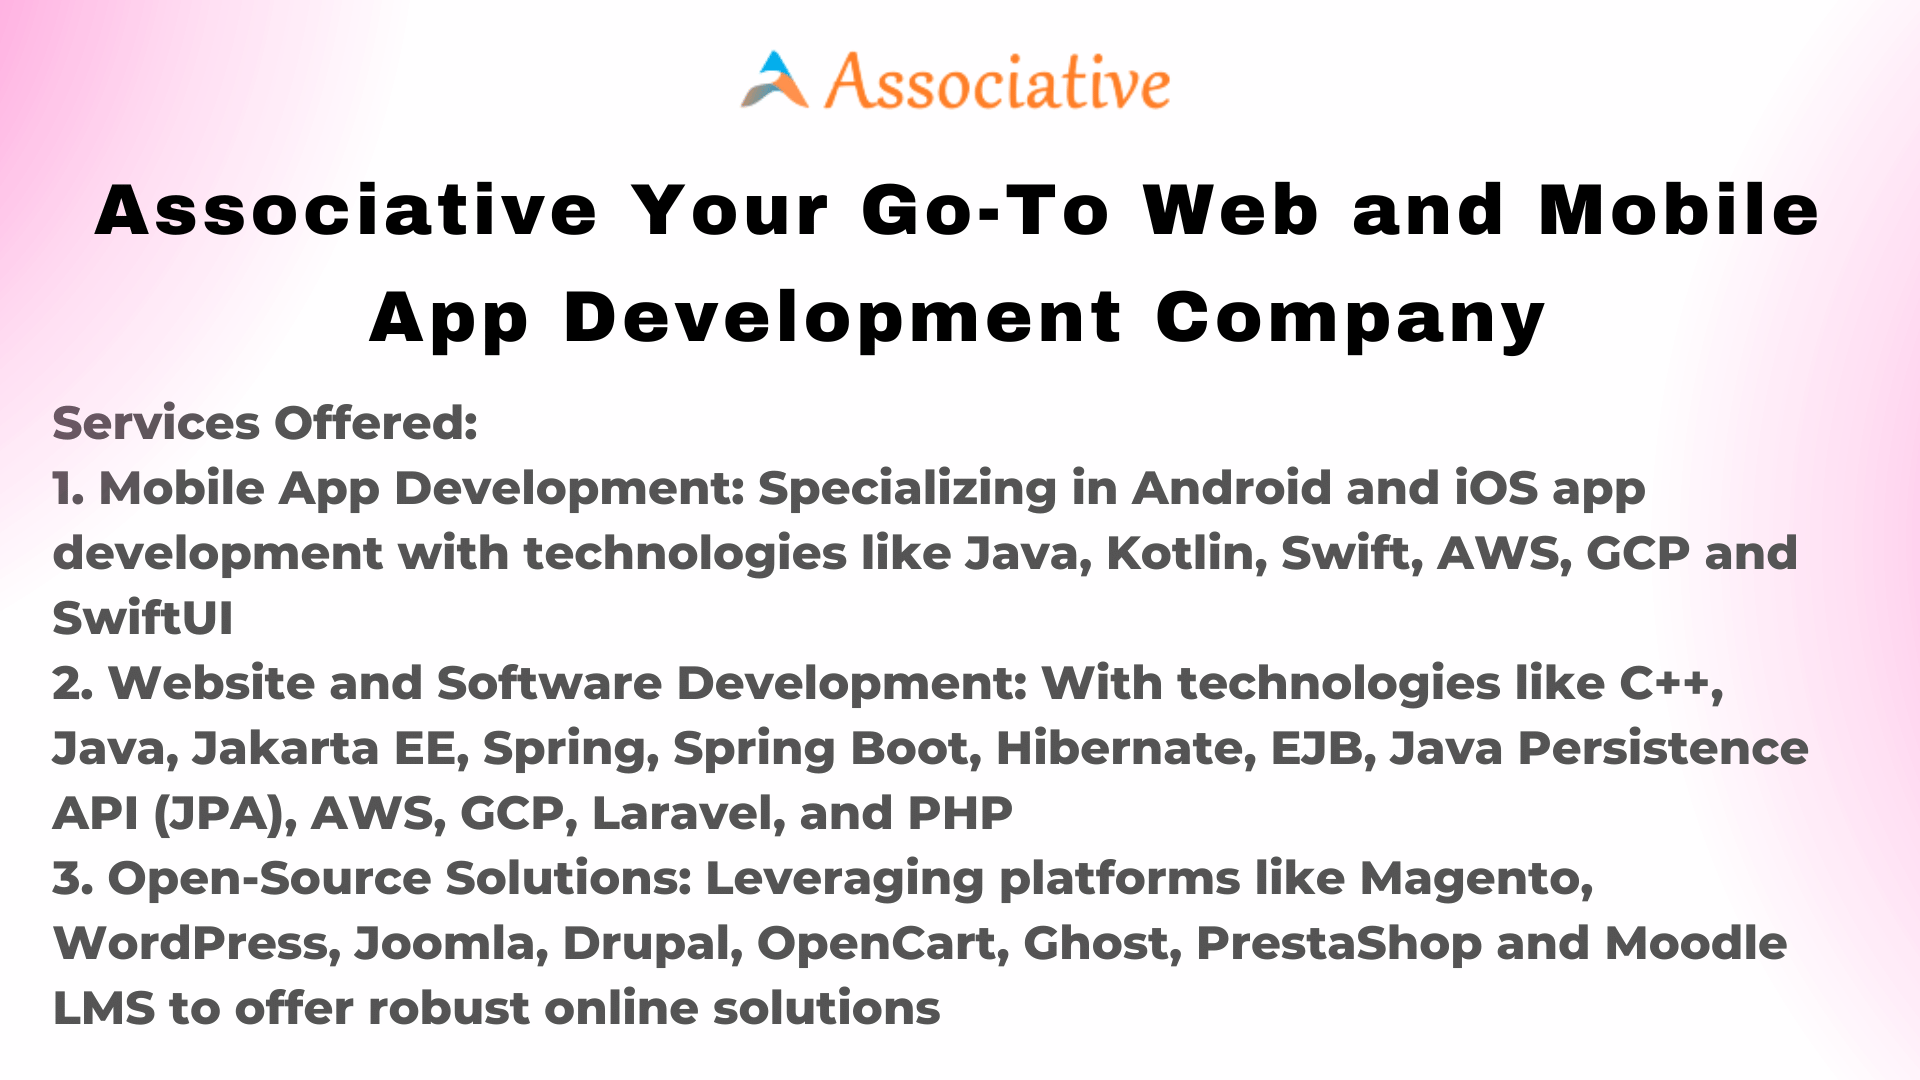 Associative Your Go-To Web and Mobile App Development Company